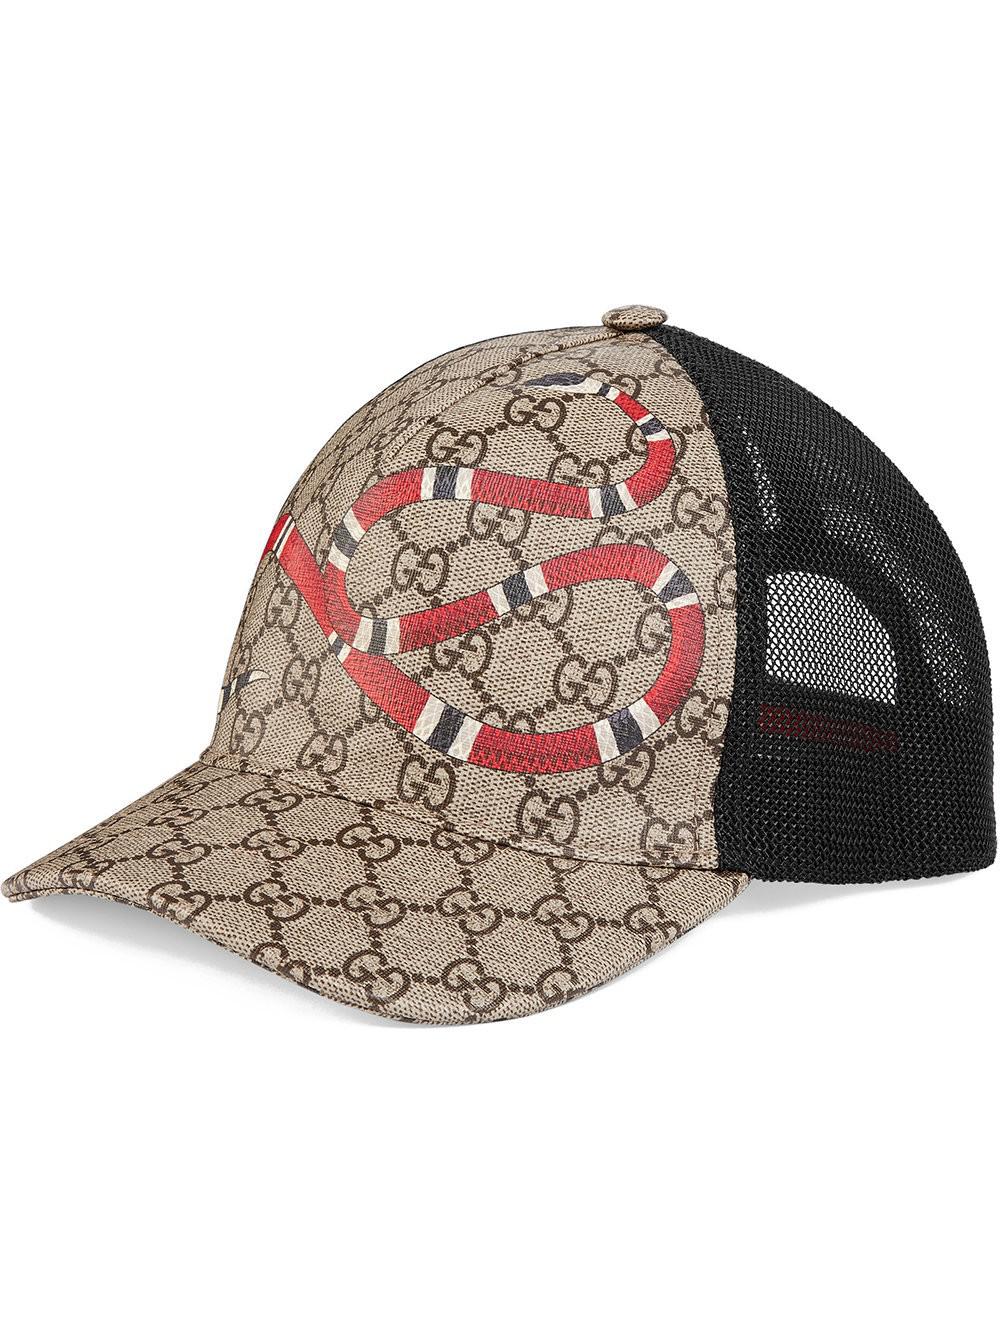 gucci snake hat price